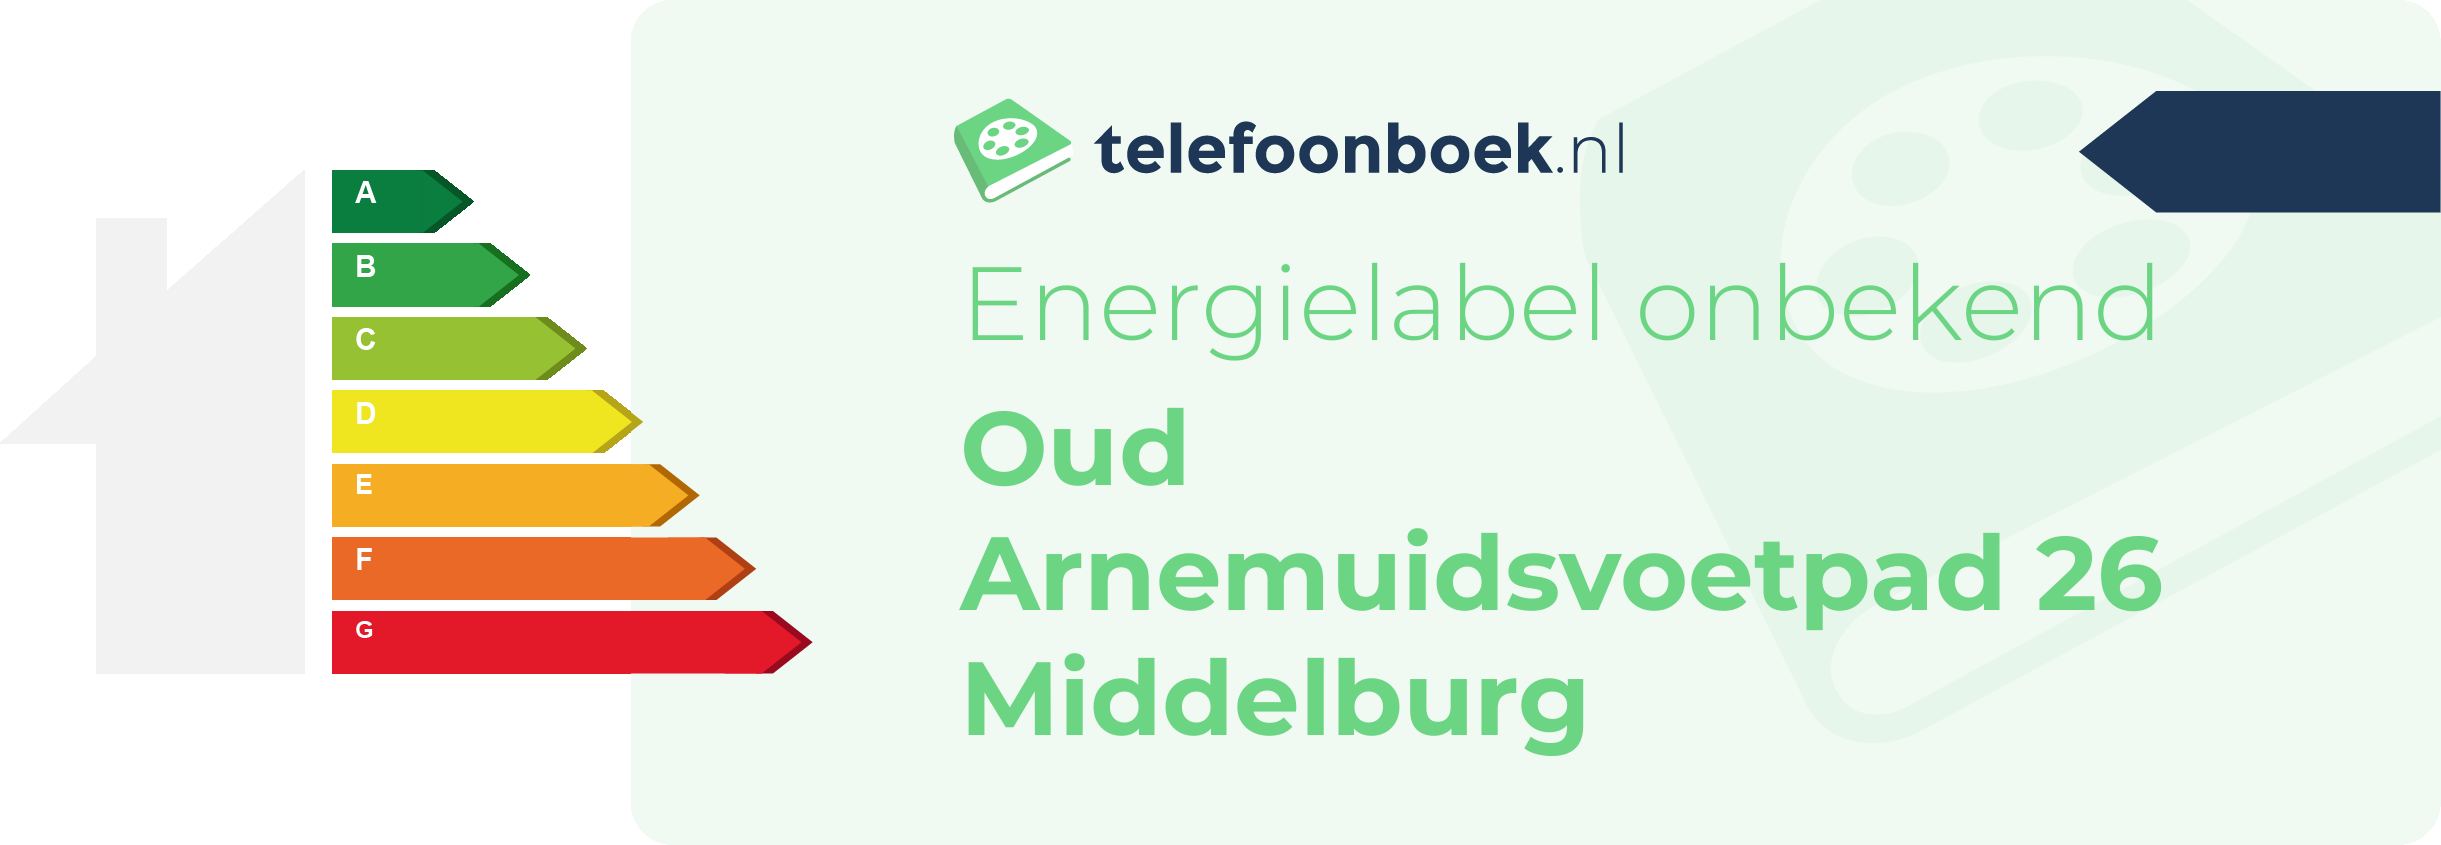 Energielabel Oud Arnemuidsvoetpad 26 Middelburg